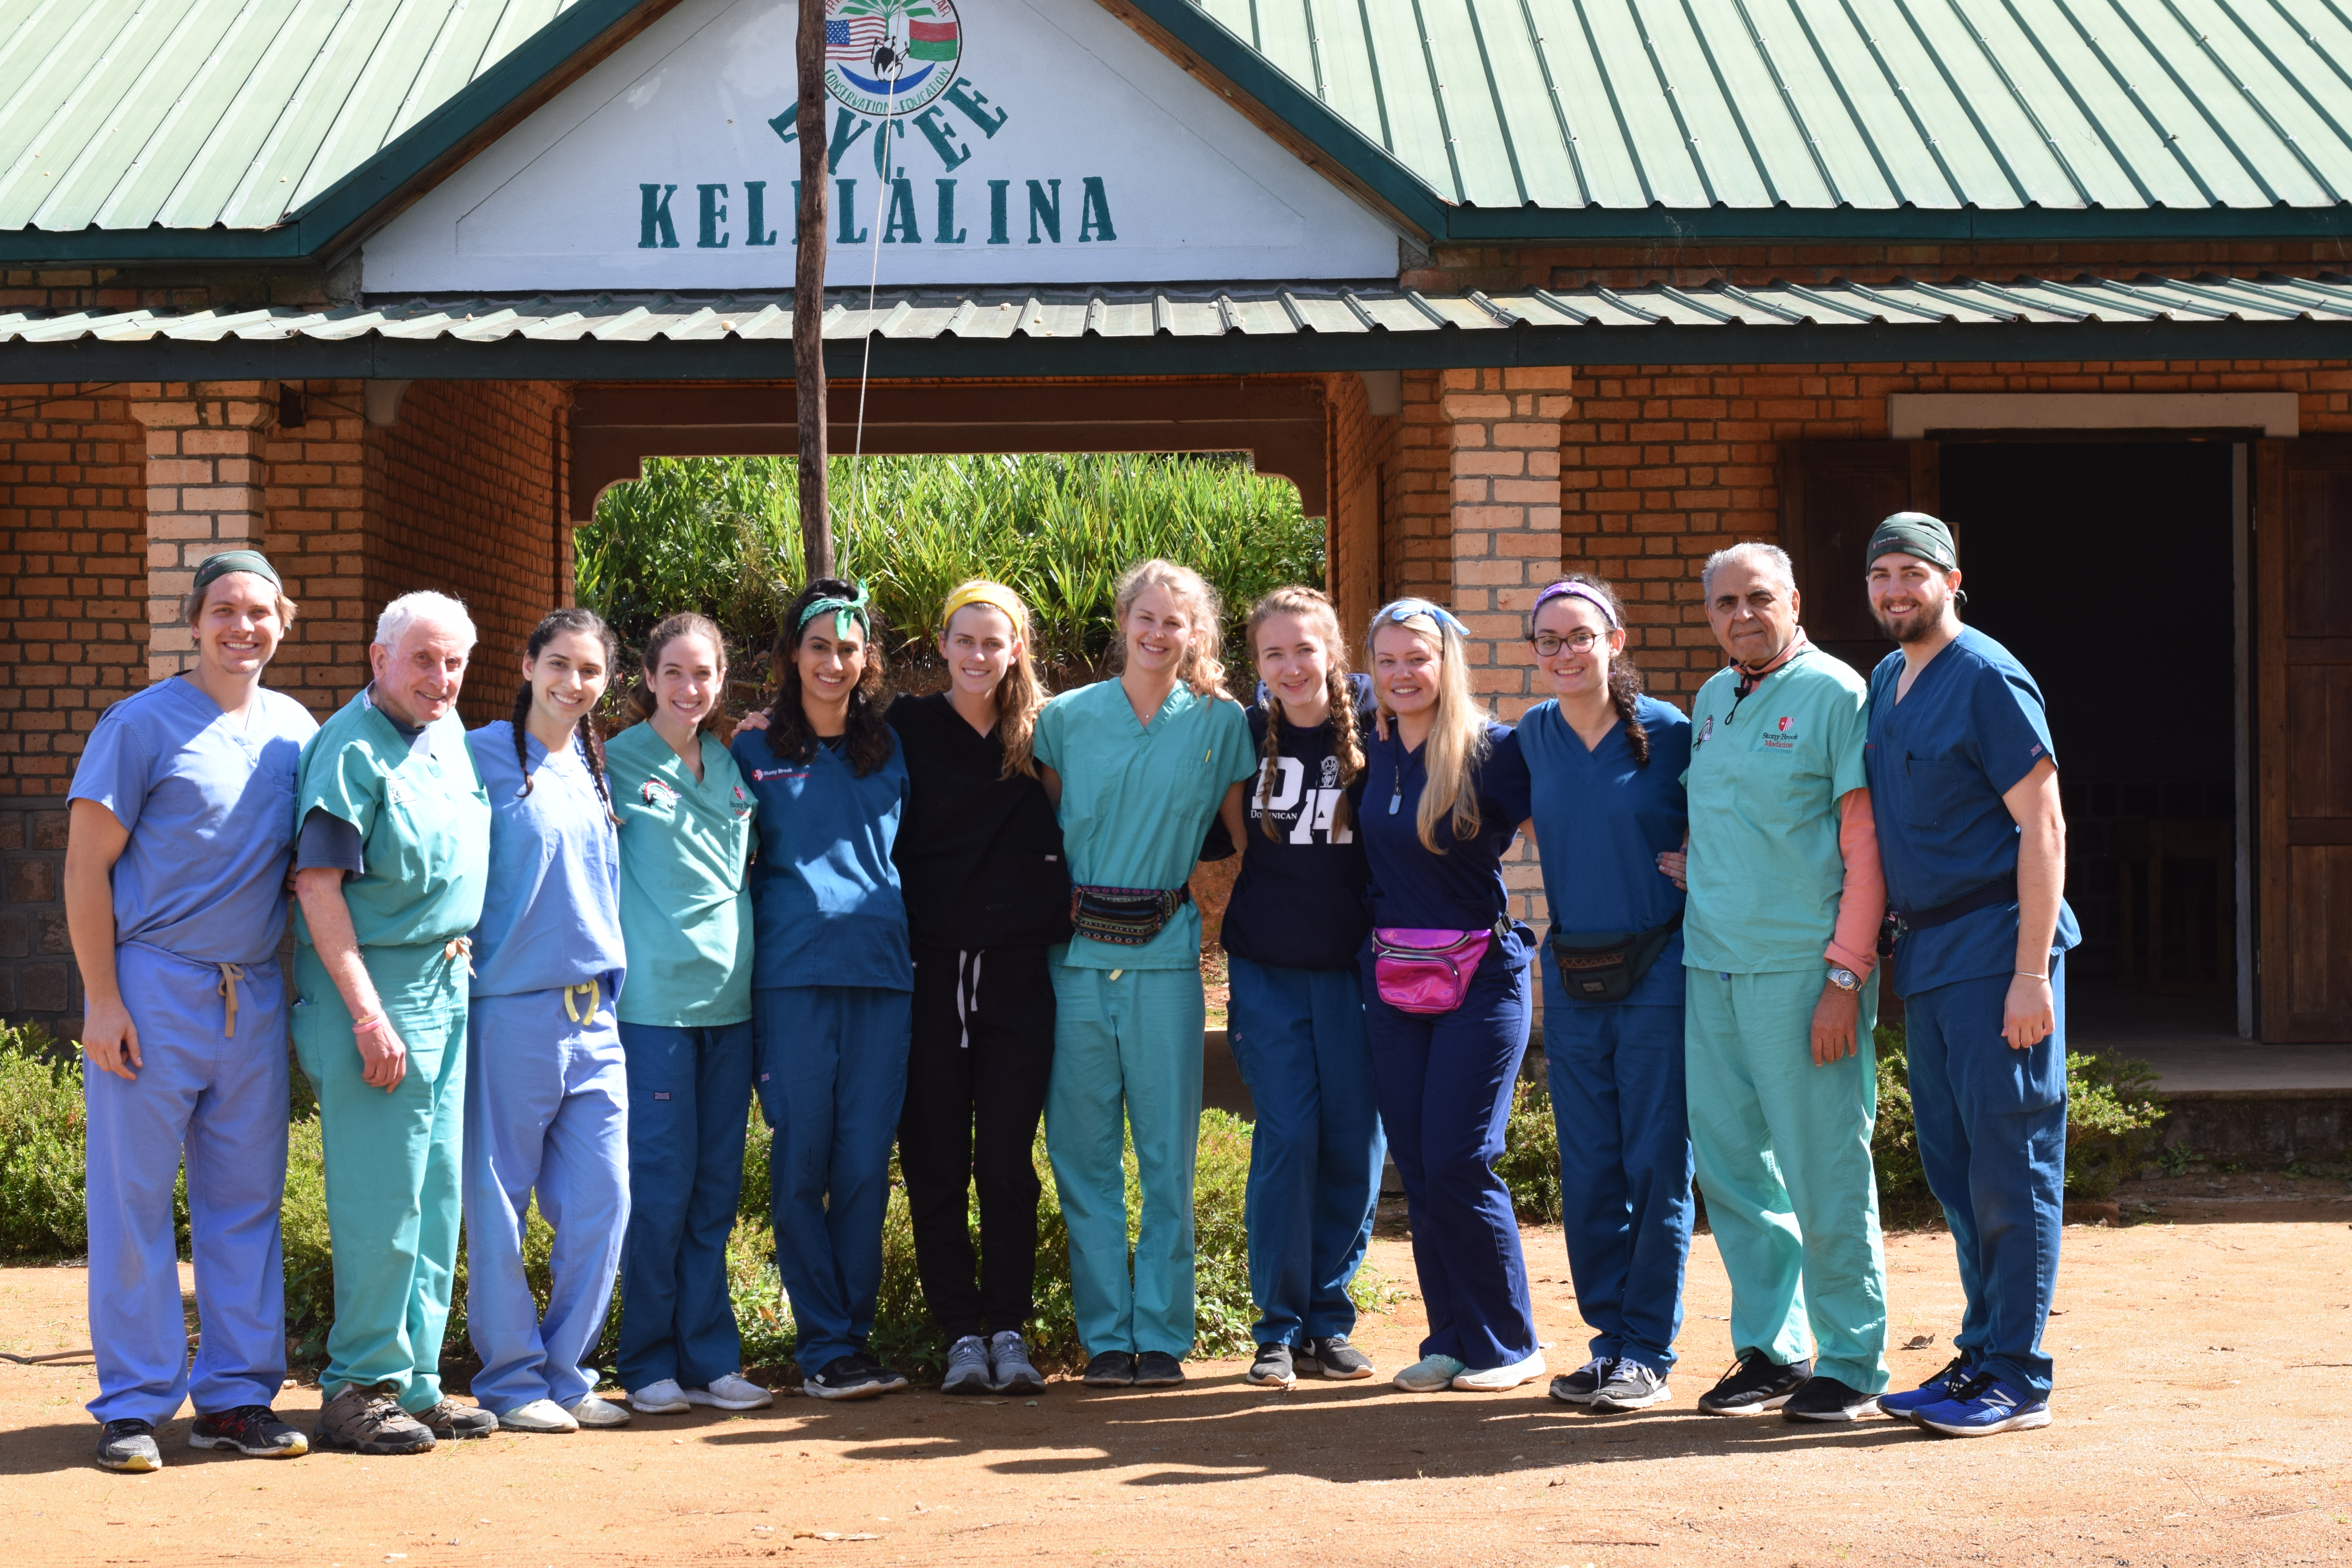 The 2019 Stony Brook School of Dental Medicine Madagascar team in Keliliana.